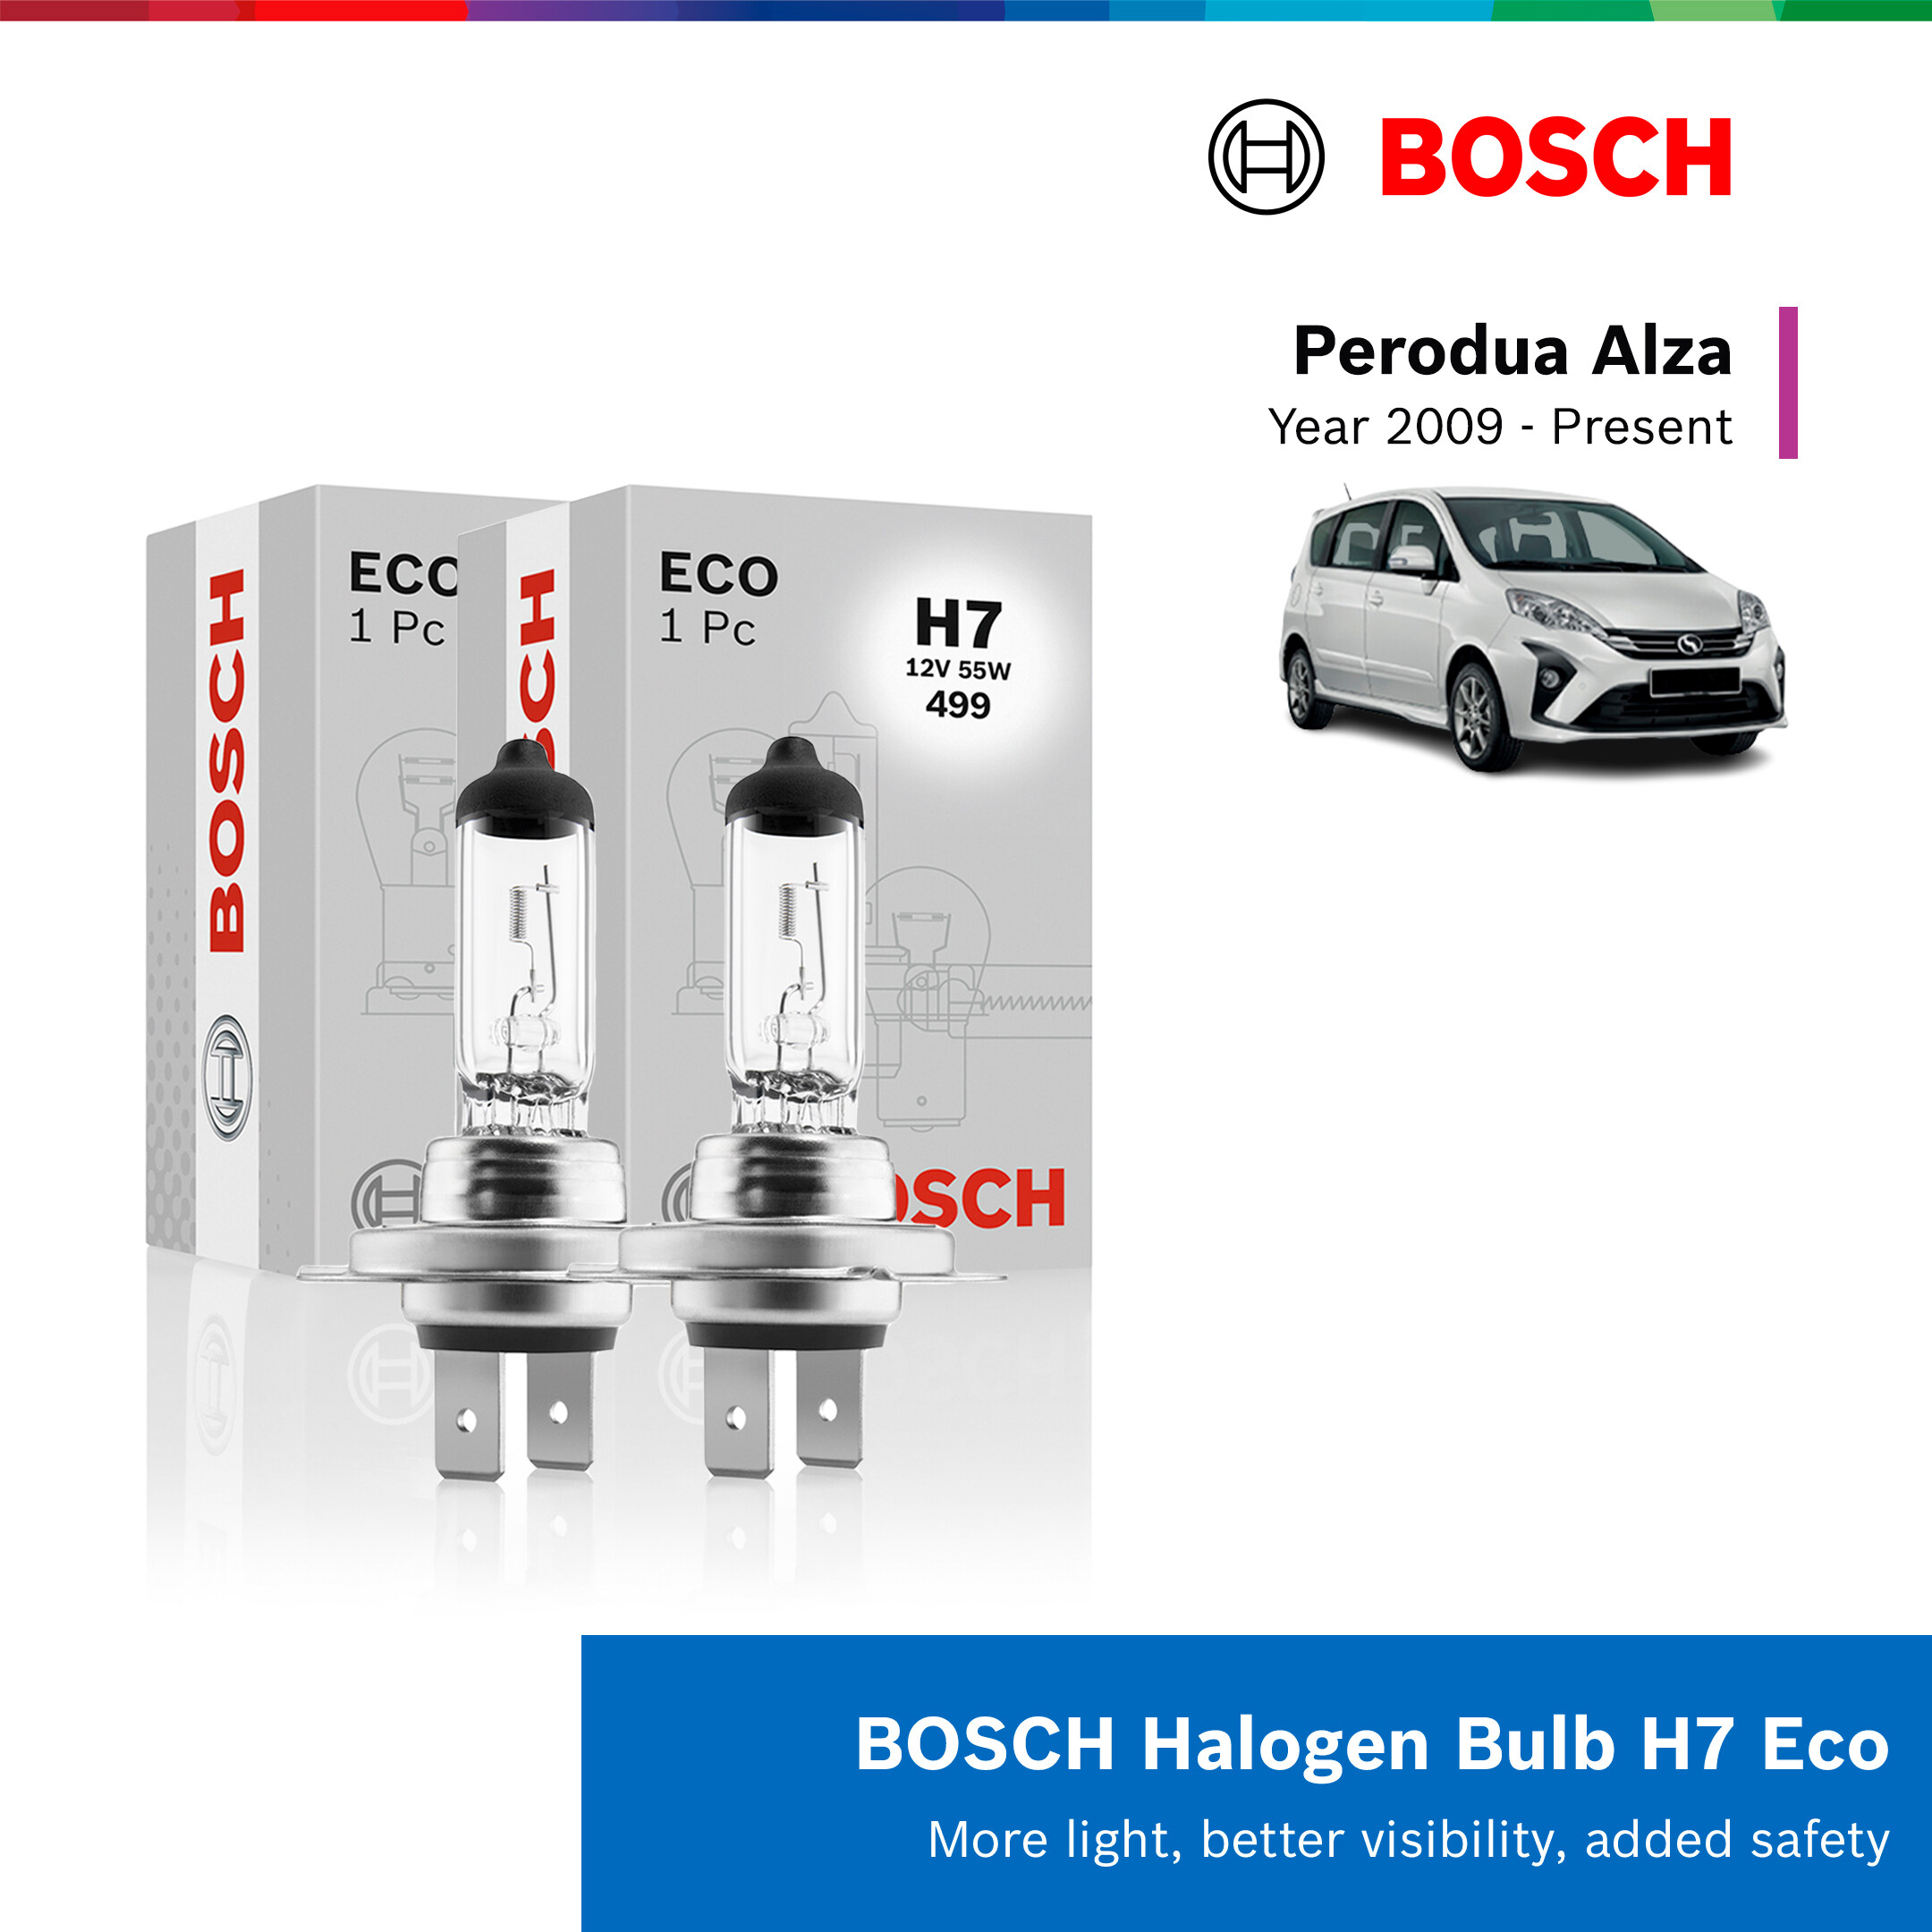 Bosch H7 Halogen Headlight Bulb (55w) set of 2 for Proton Persona